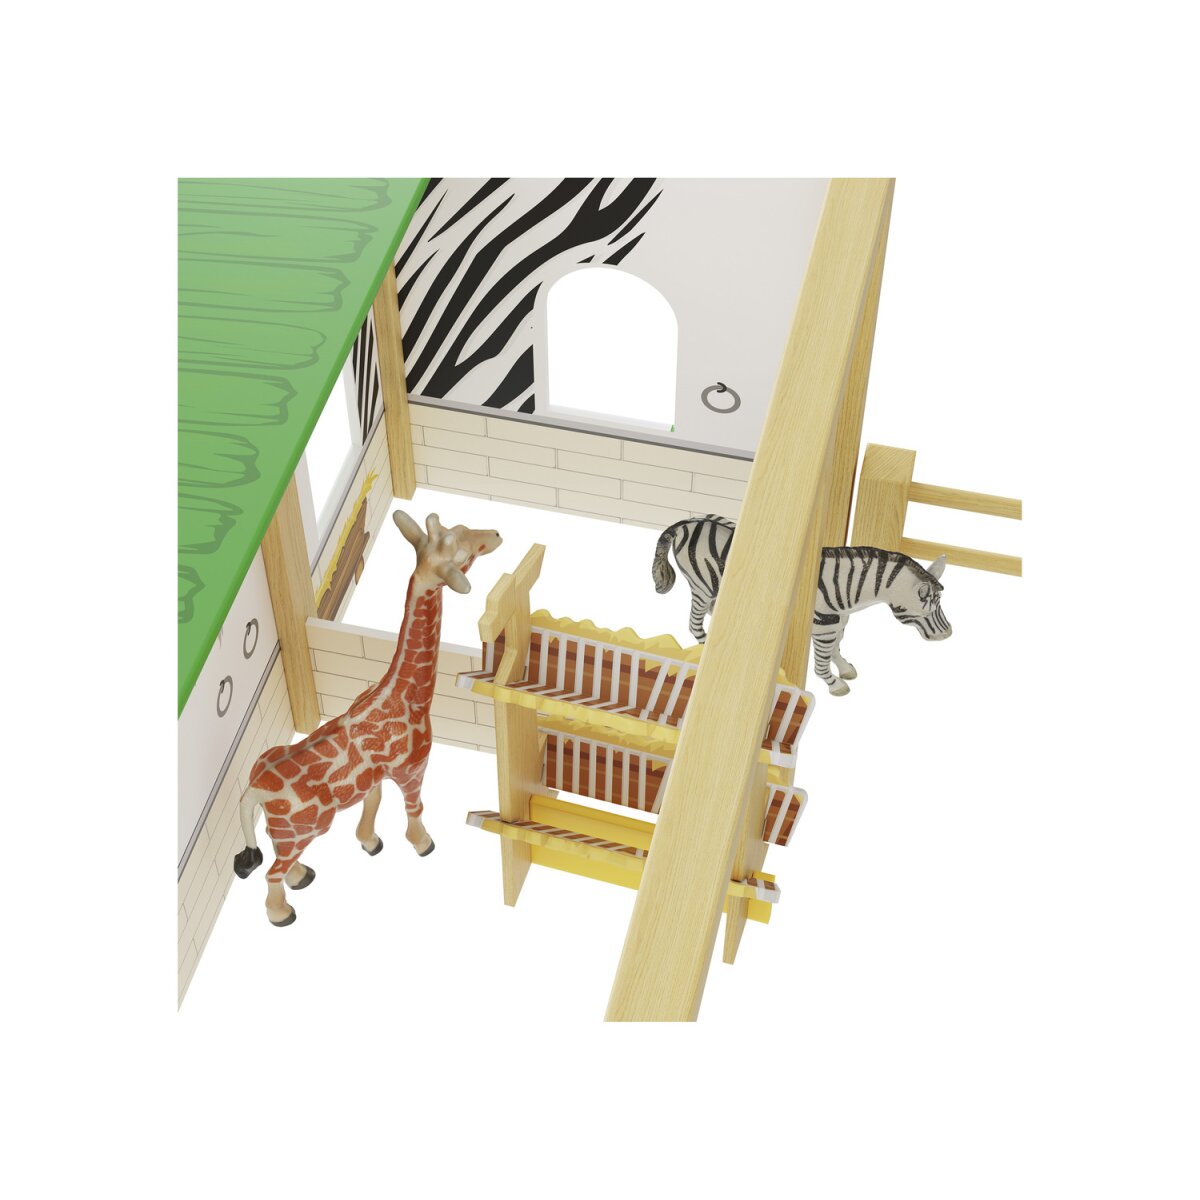 Playtive Set Bauernhof / Feenbaum / Zoo, aus Holz - B-Ware, 14,99 €